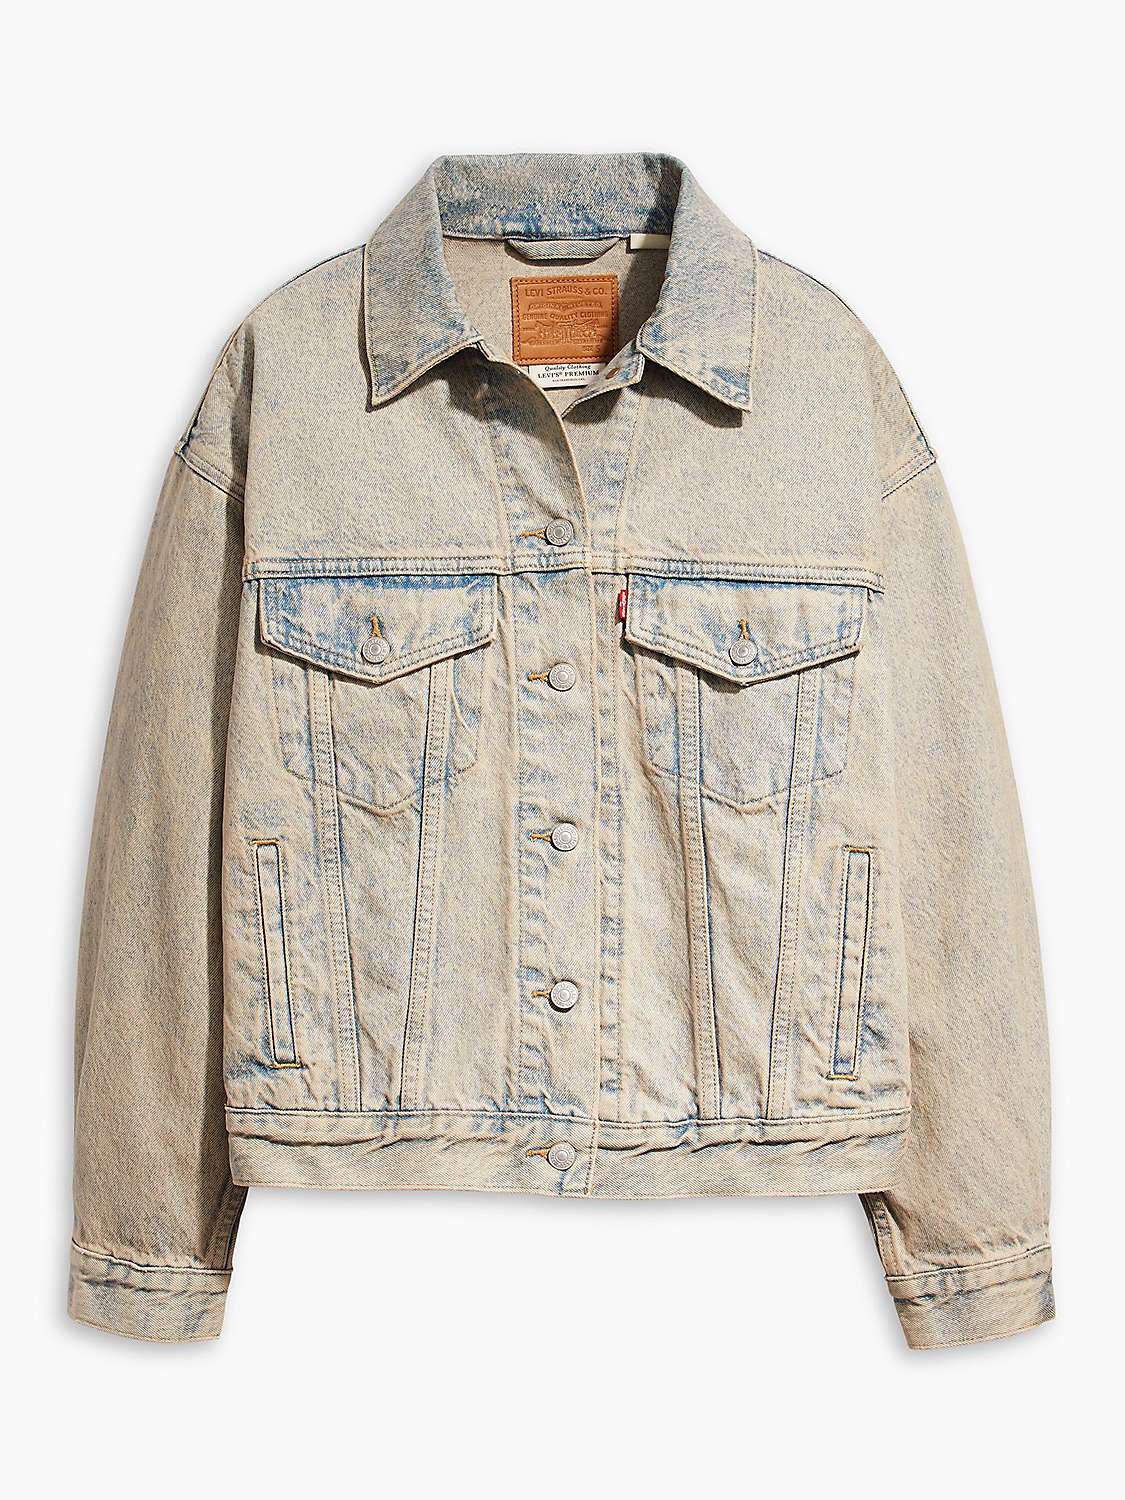 Buy Levi's 90's Trucker Denim Jacket, Where's The Tint Online at johnlewis.com